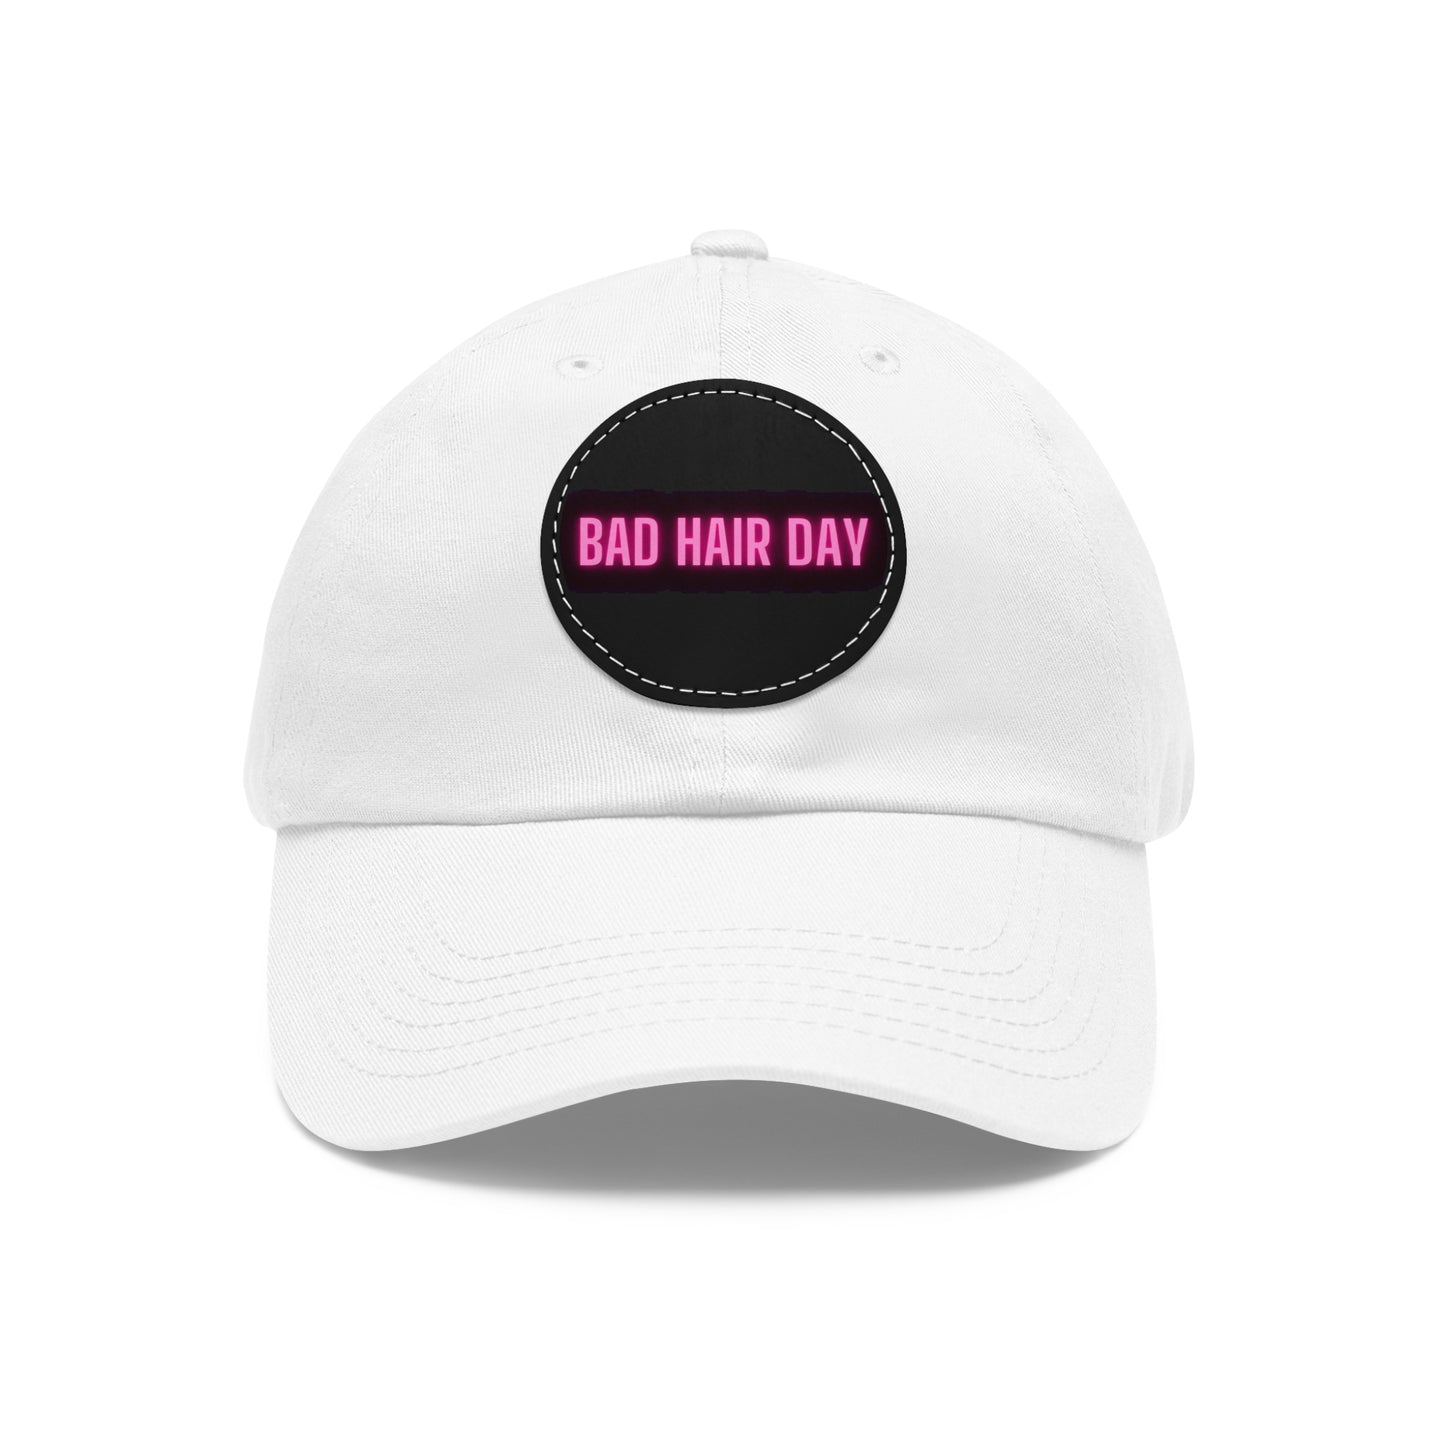 Bad Hair Day Caps